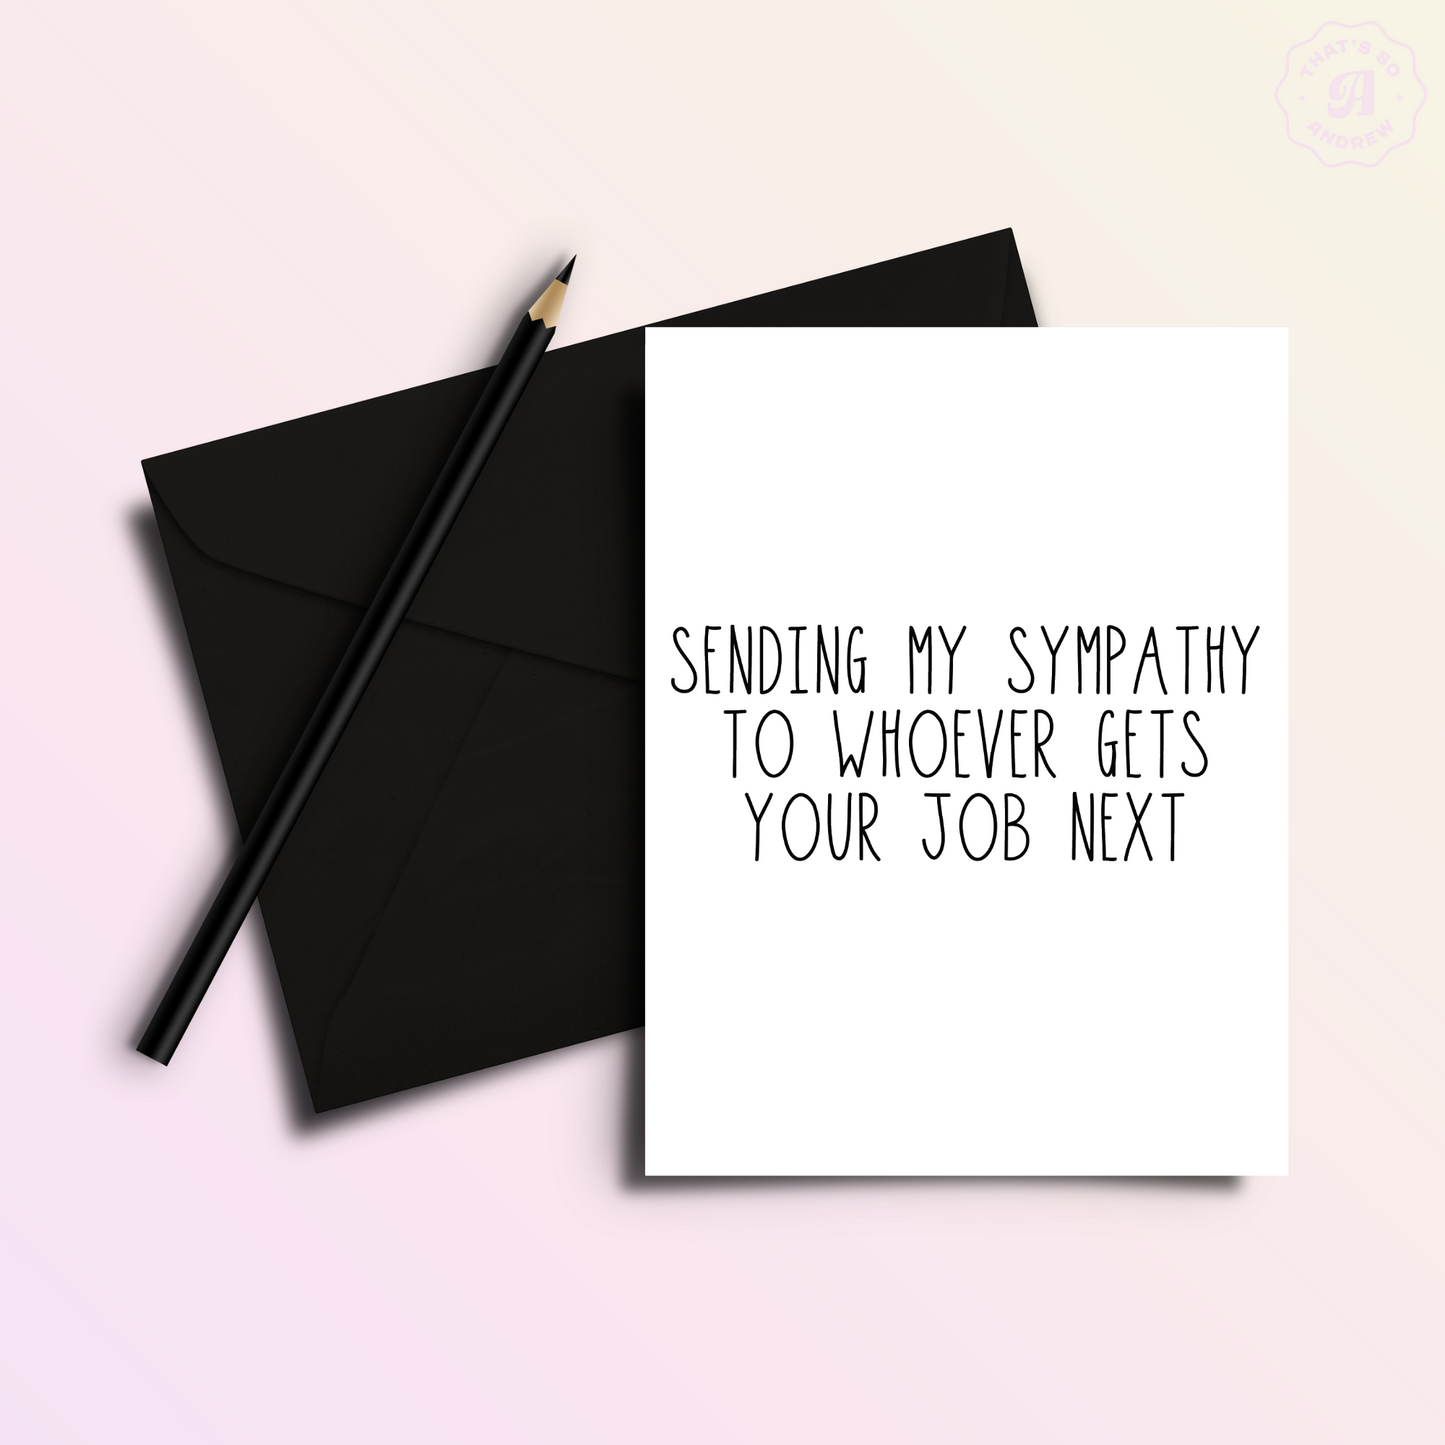 Who Gets Your Job | Funny No Job Greeting Card